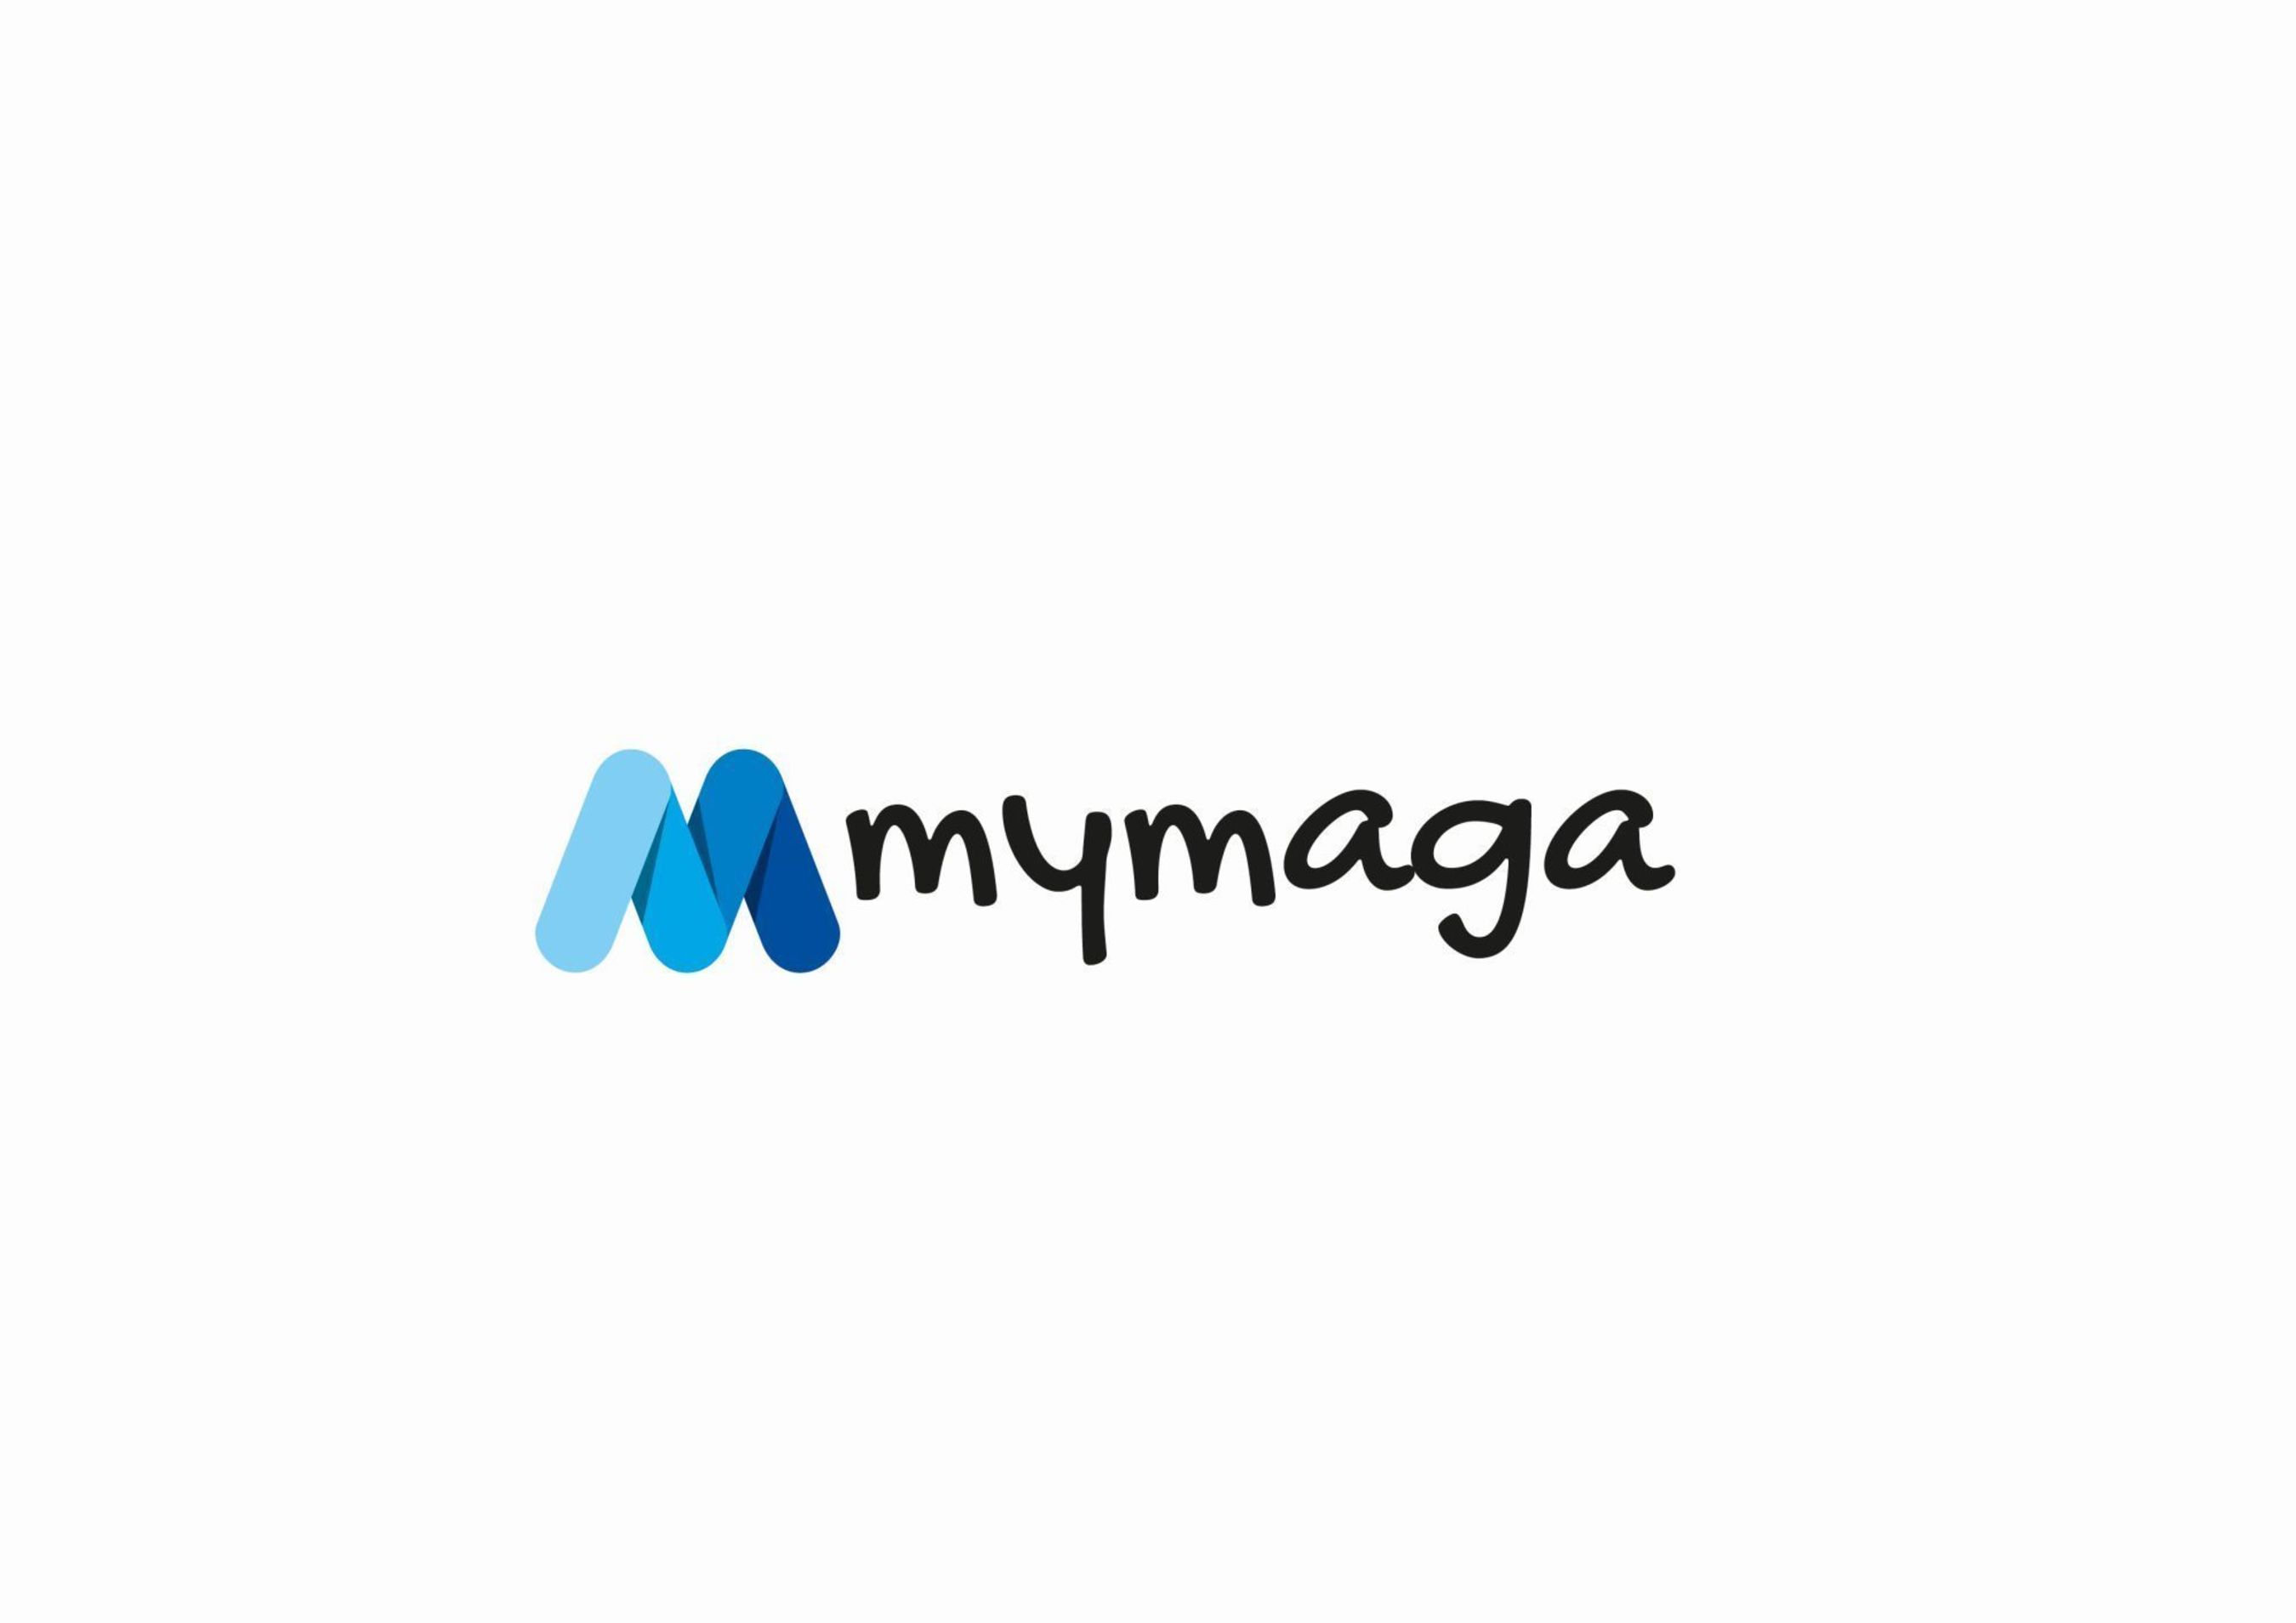 mymaga Logo (PRNewsFoto/JP - inspiring knowledge_mymaga)